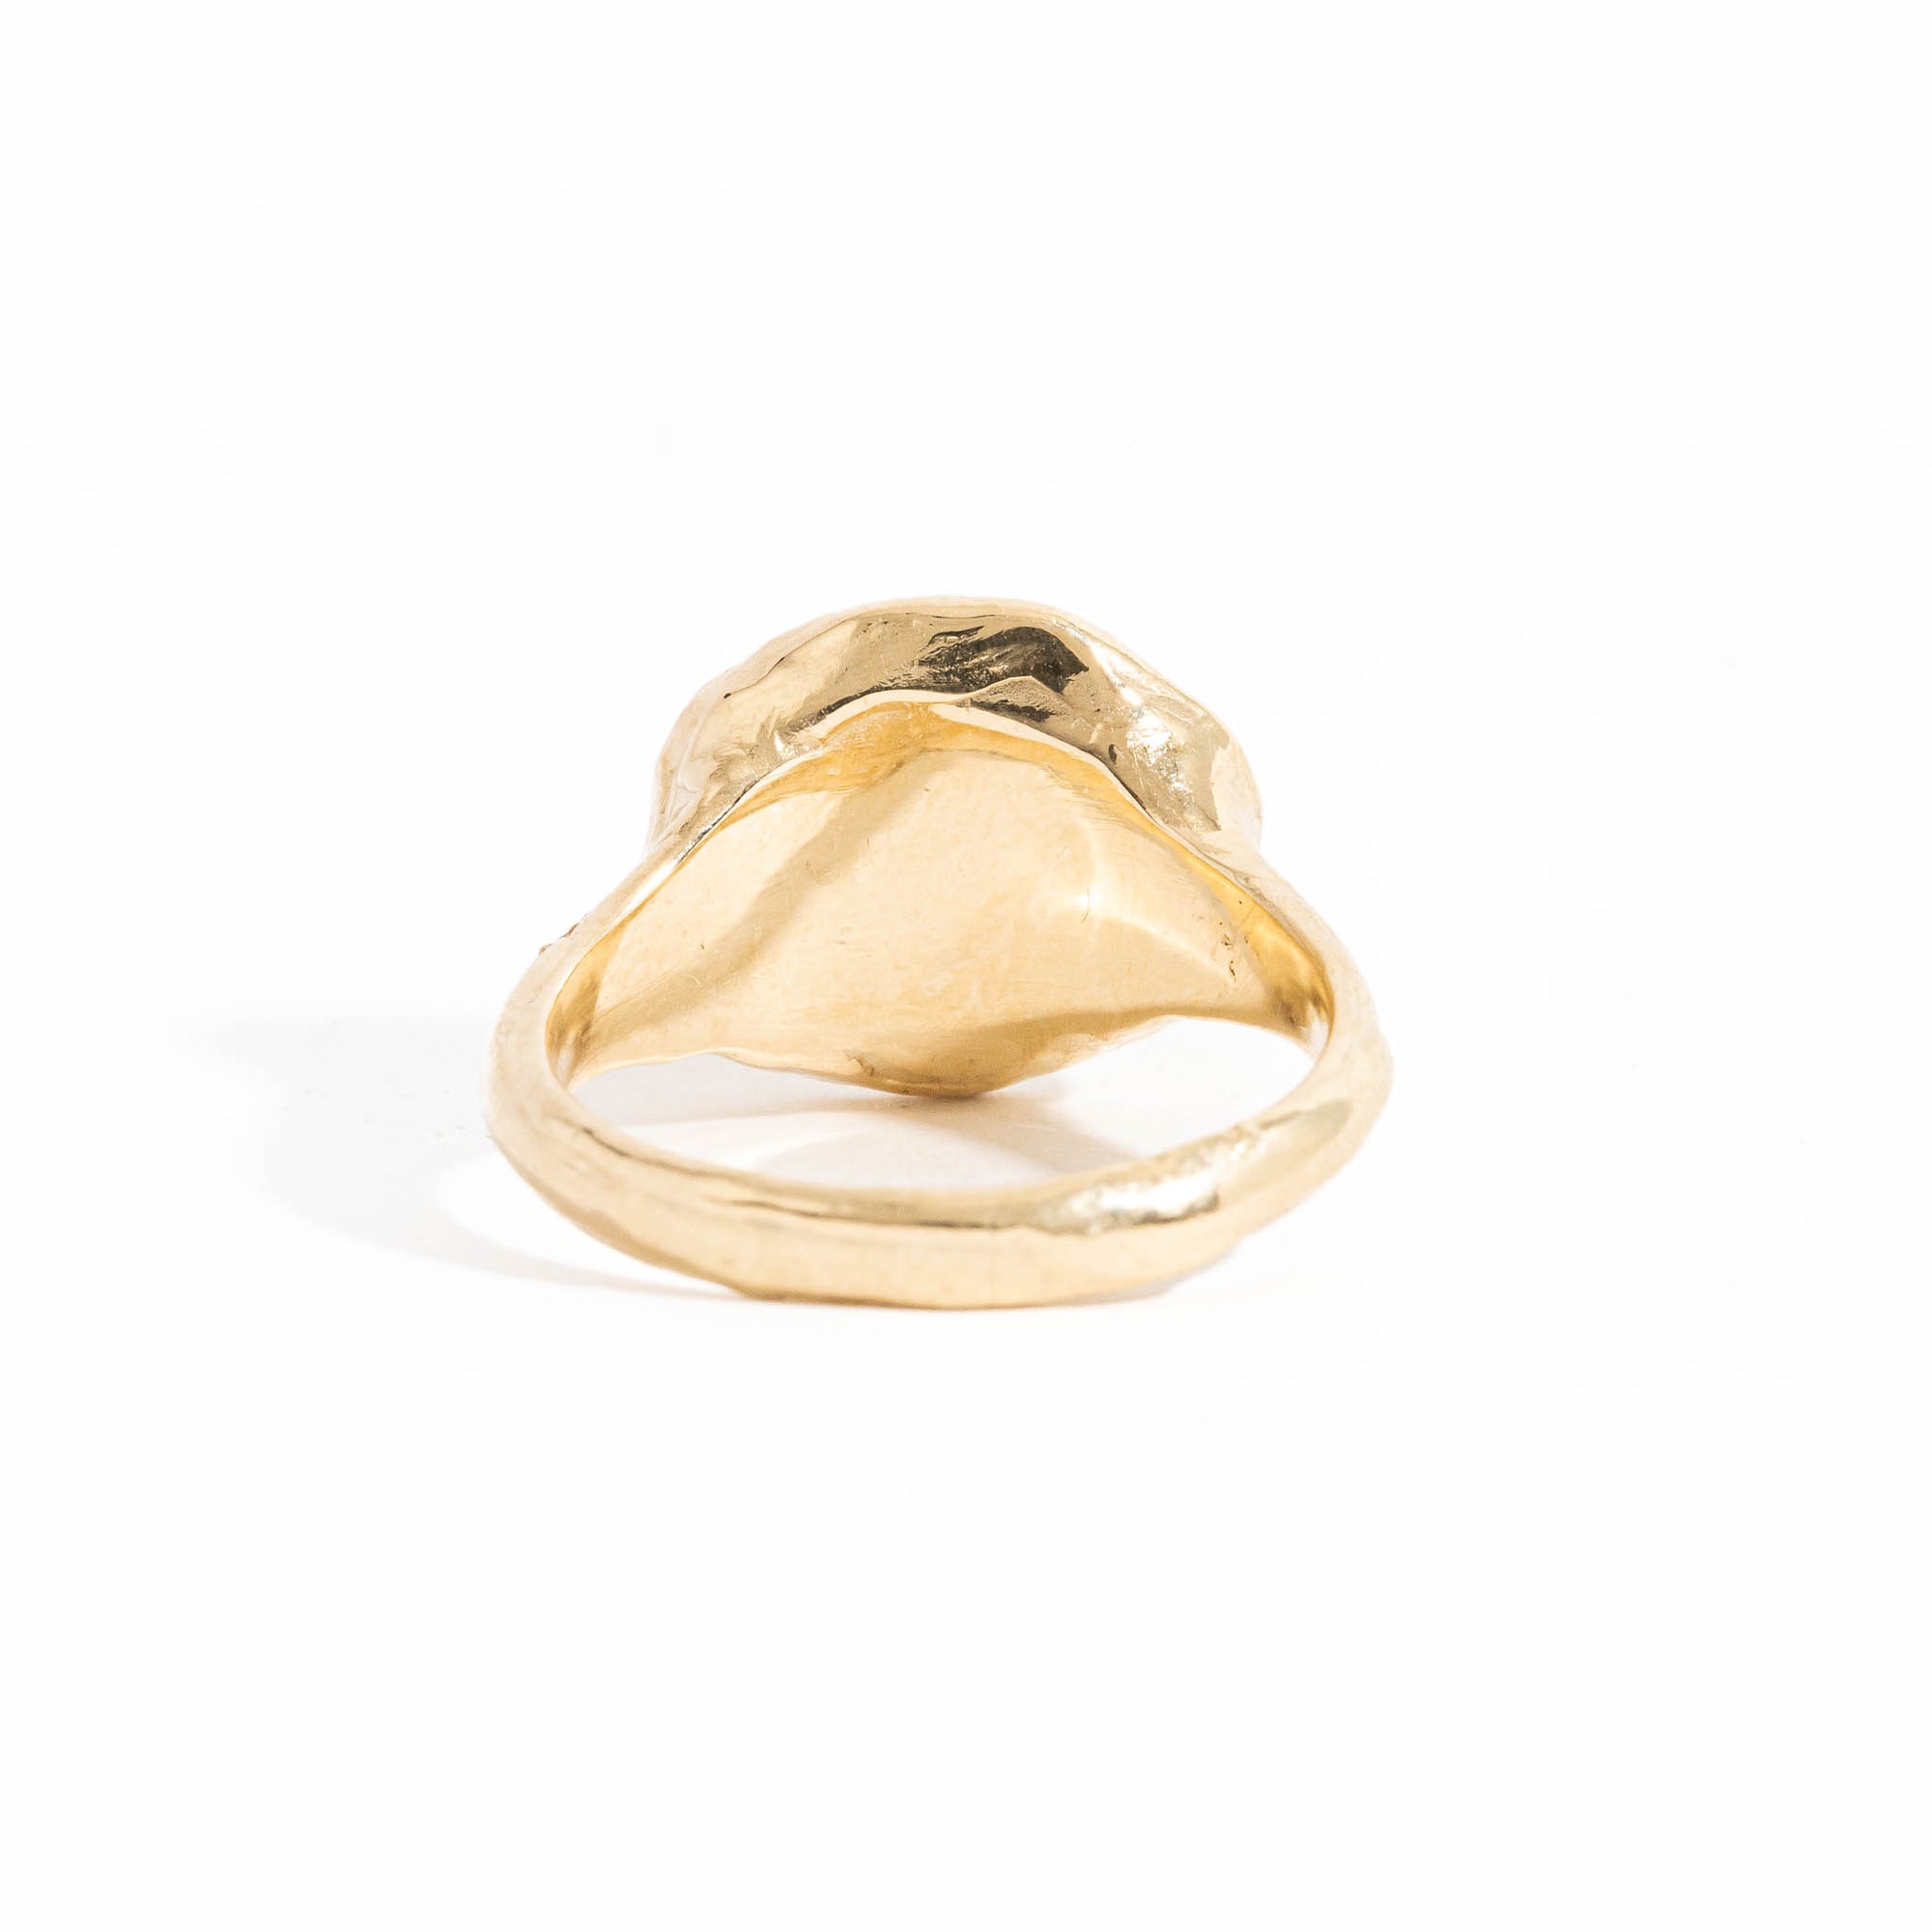  Round Signet Ring wth Pave Set White Diamond in 9 Carat Yellow Gold